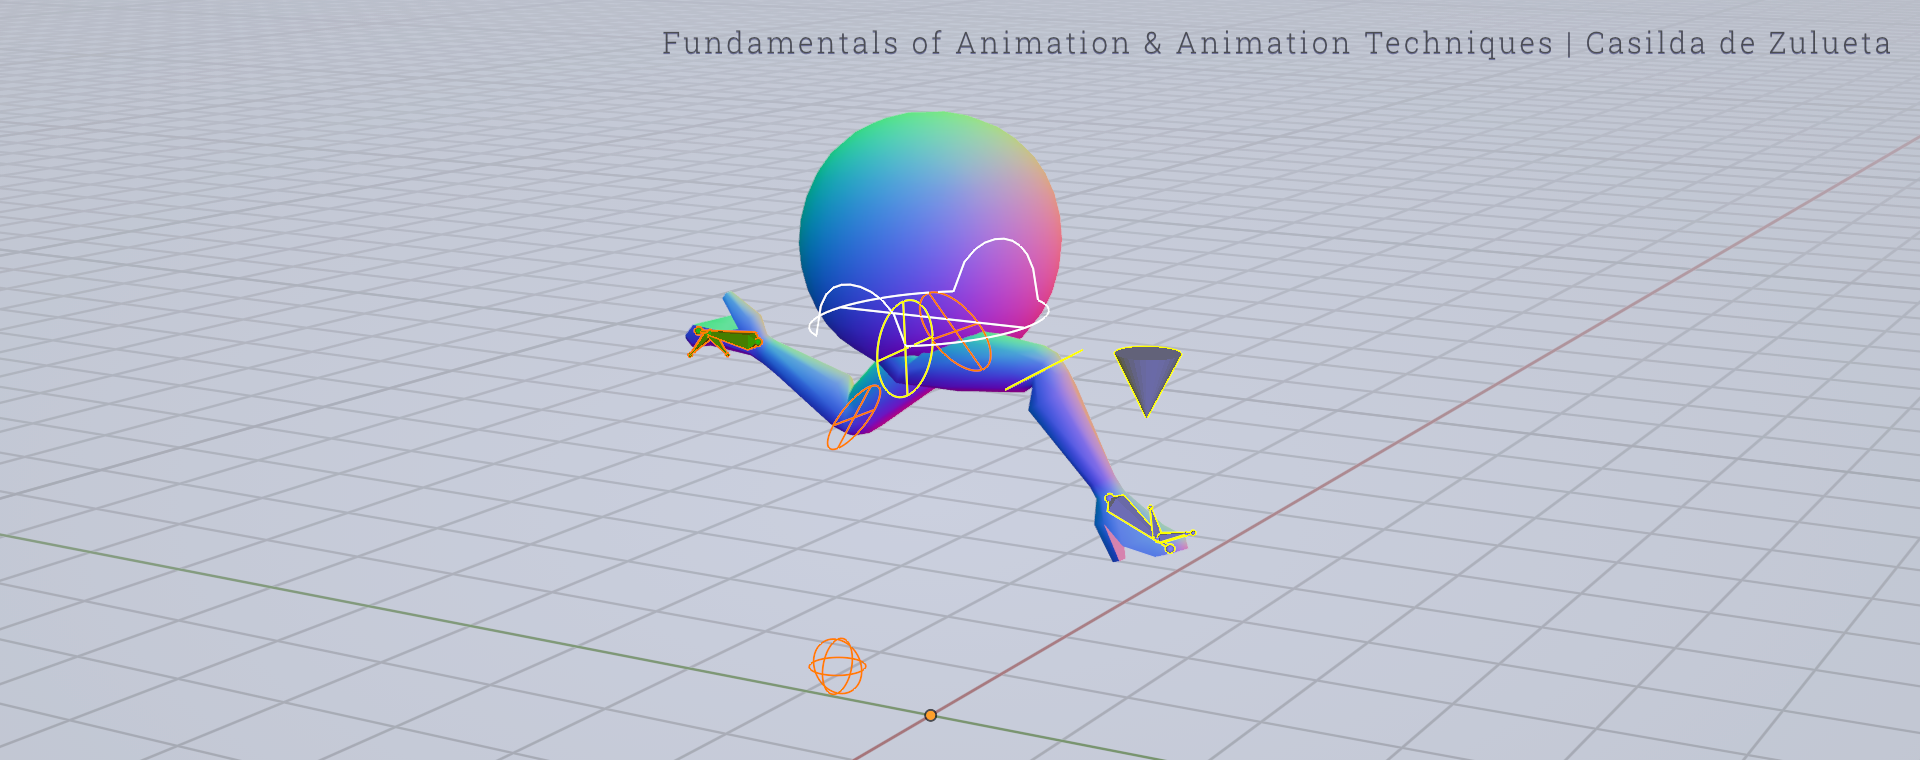 Fundamentals of Animation Fundamentals of Animation & Animation Techniques | Casilda de Zulueta